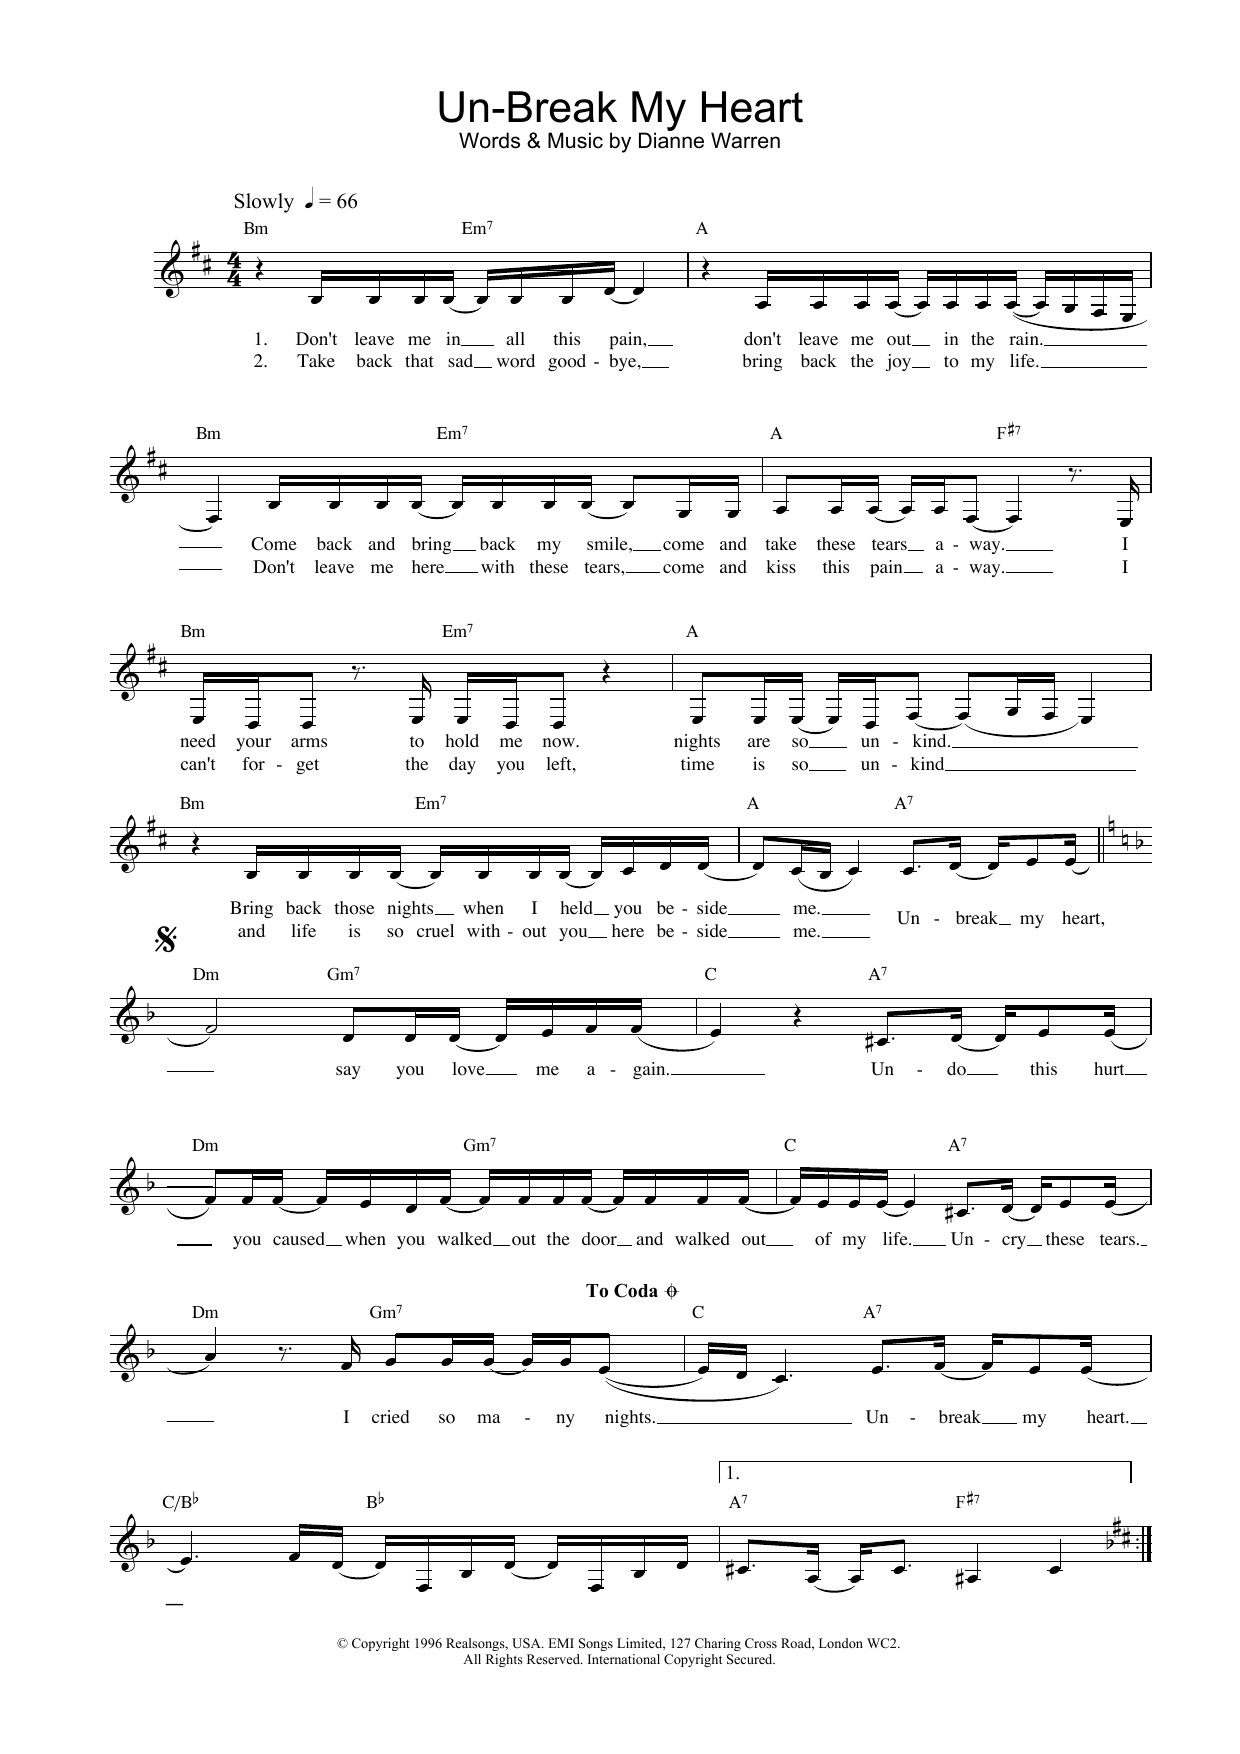 Diane Warren Un-break My Heart Sheet Music Notes & Chords for Voice - Download or Print PDF